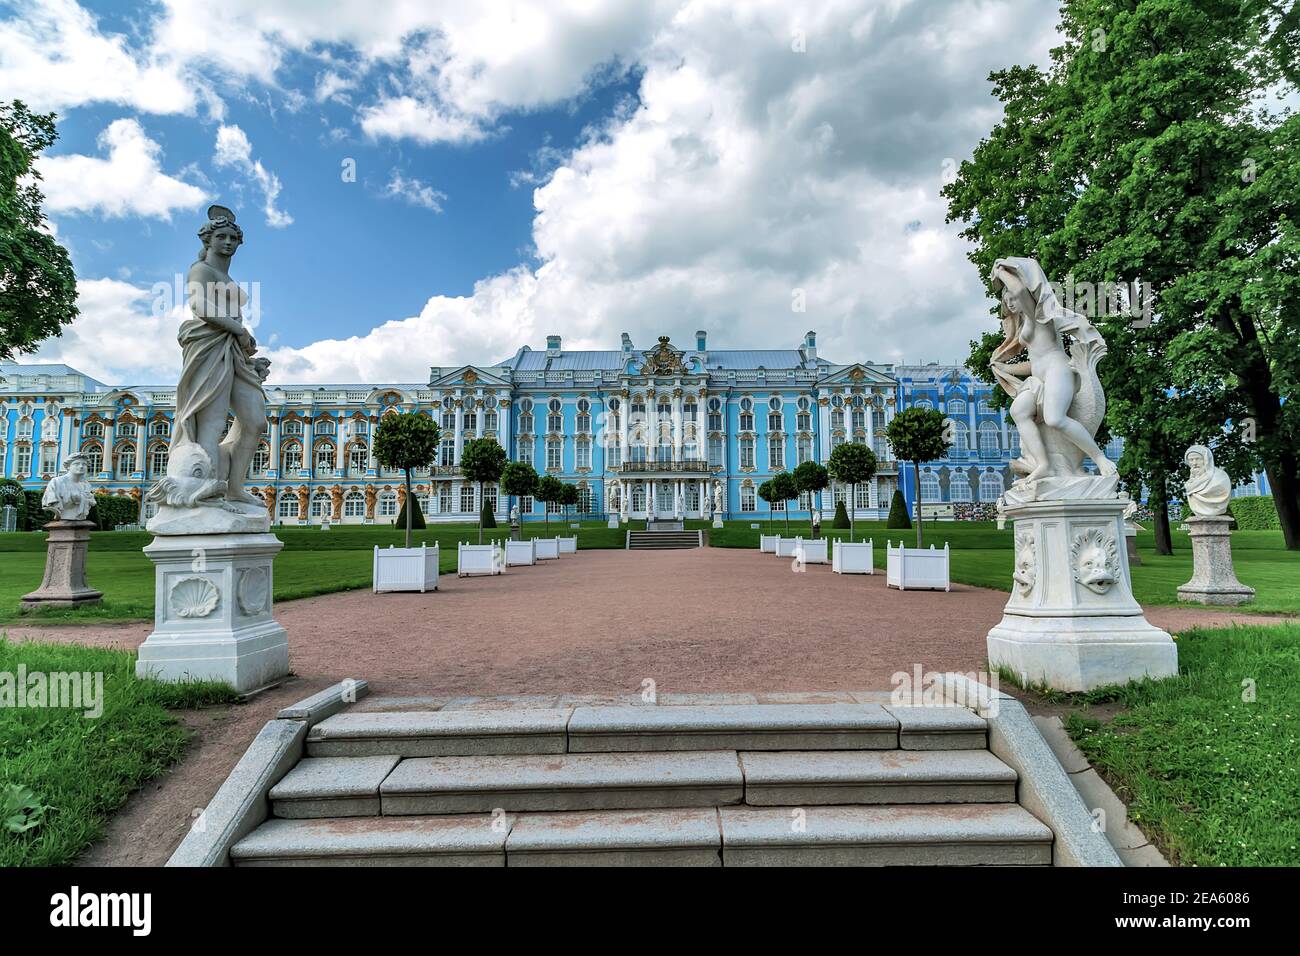 Sankt-Petersburg, Russland, 07. Juli 2014: Katharinenpalast in Sankt Petersburg Russland. Bernstein Zimmer Tsarskoe Selo Museum. Stockfoto